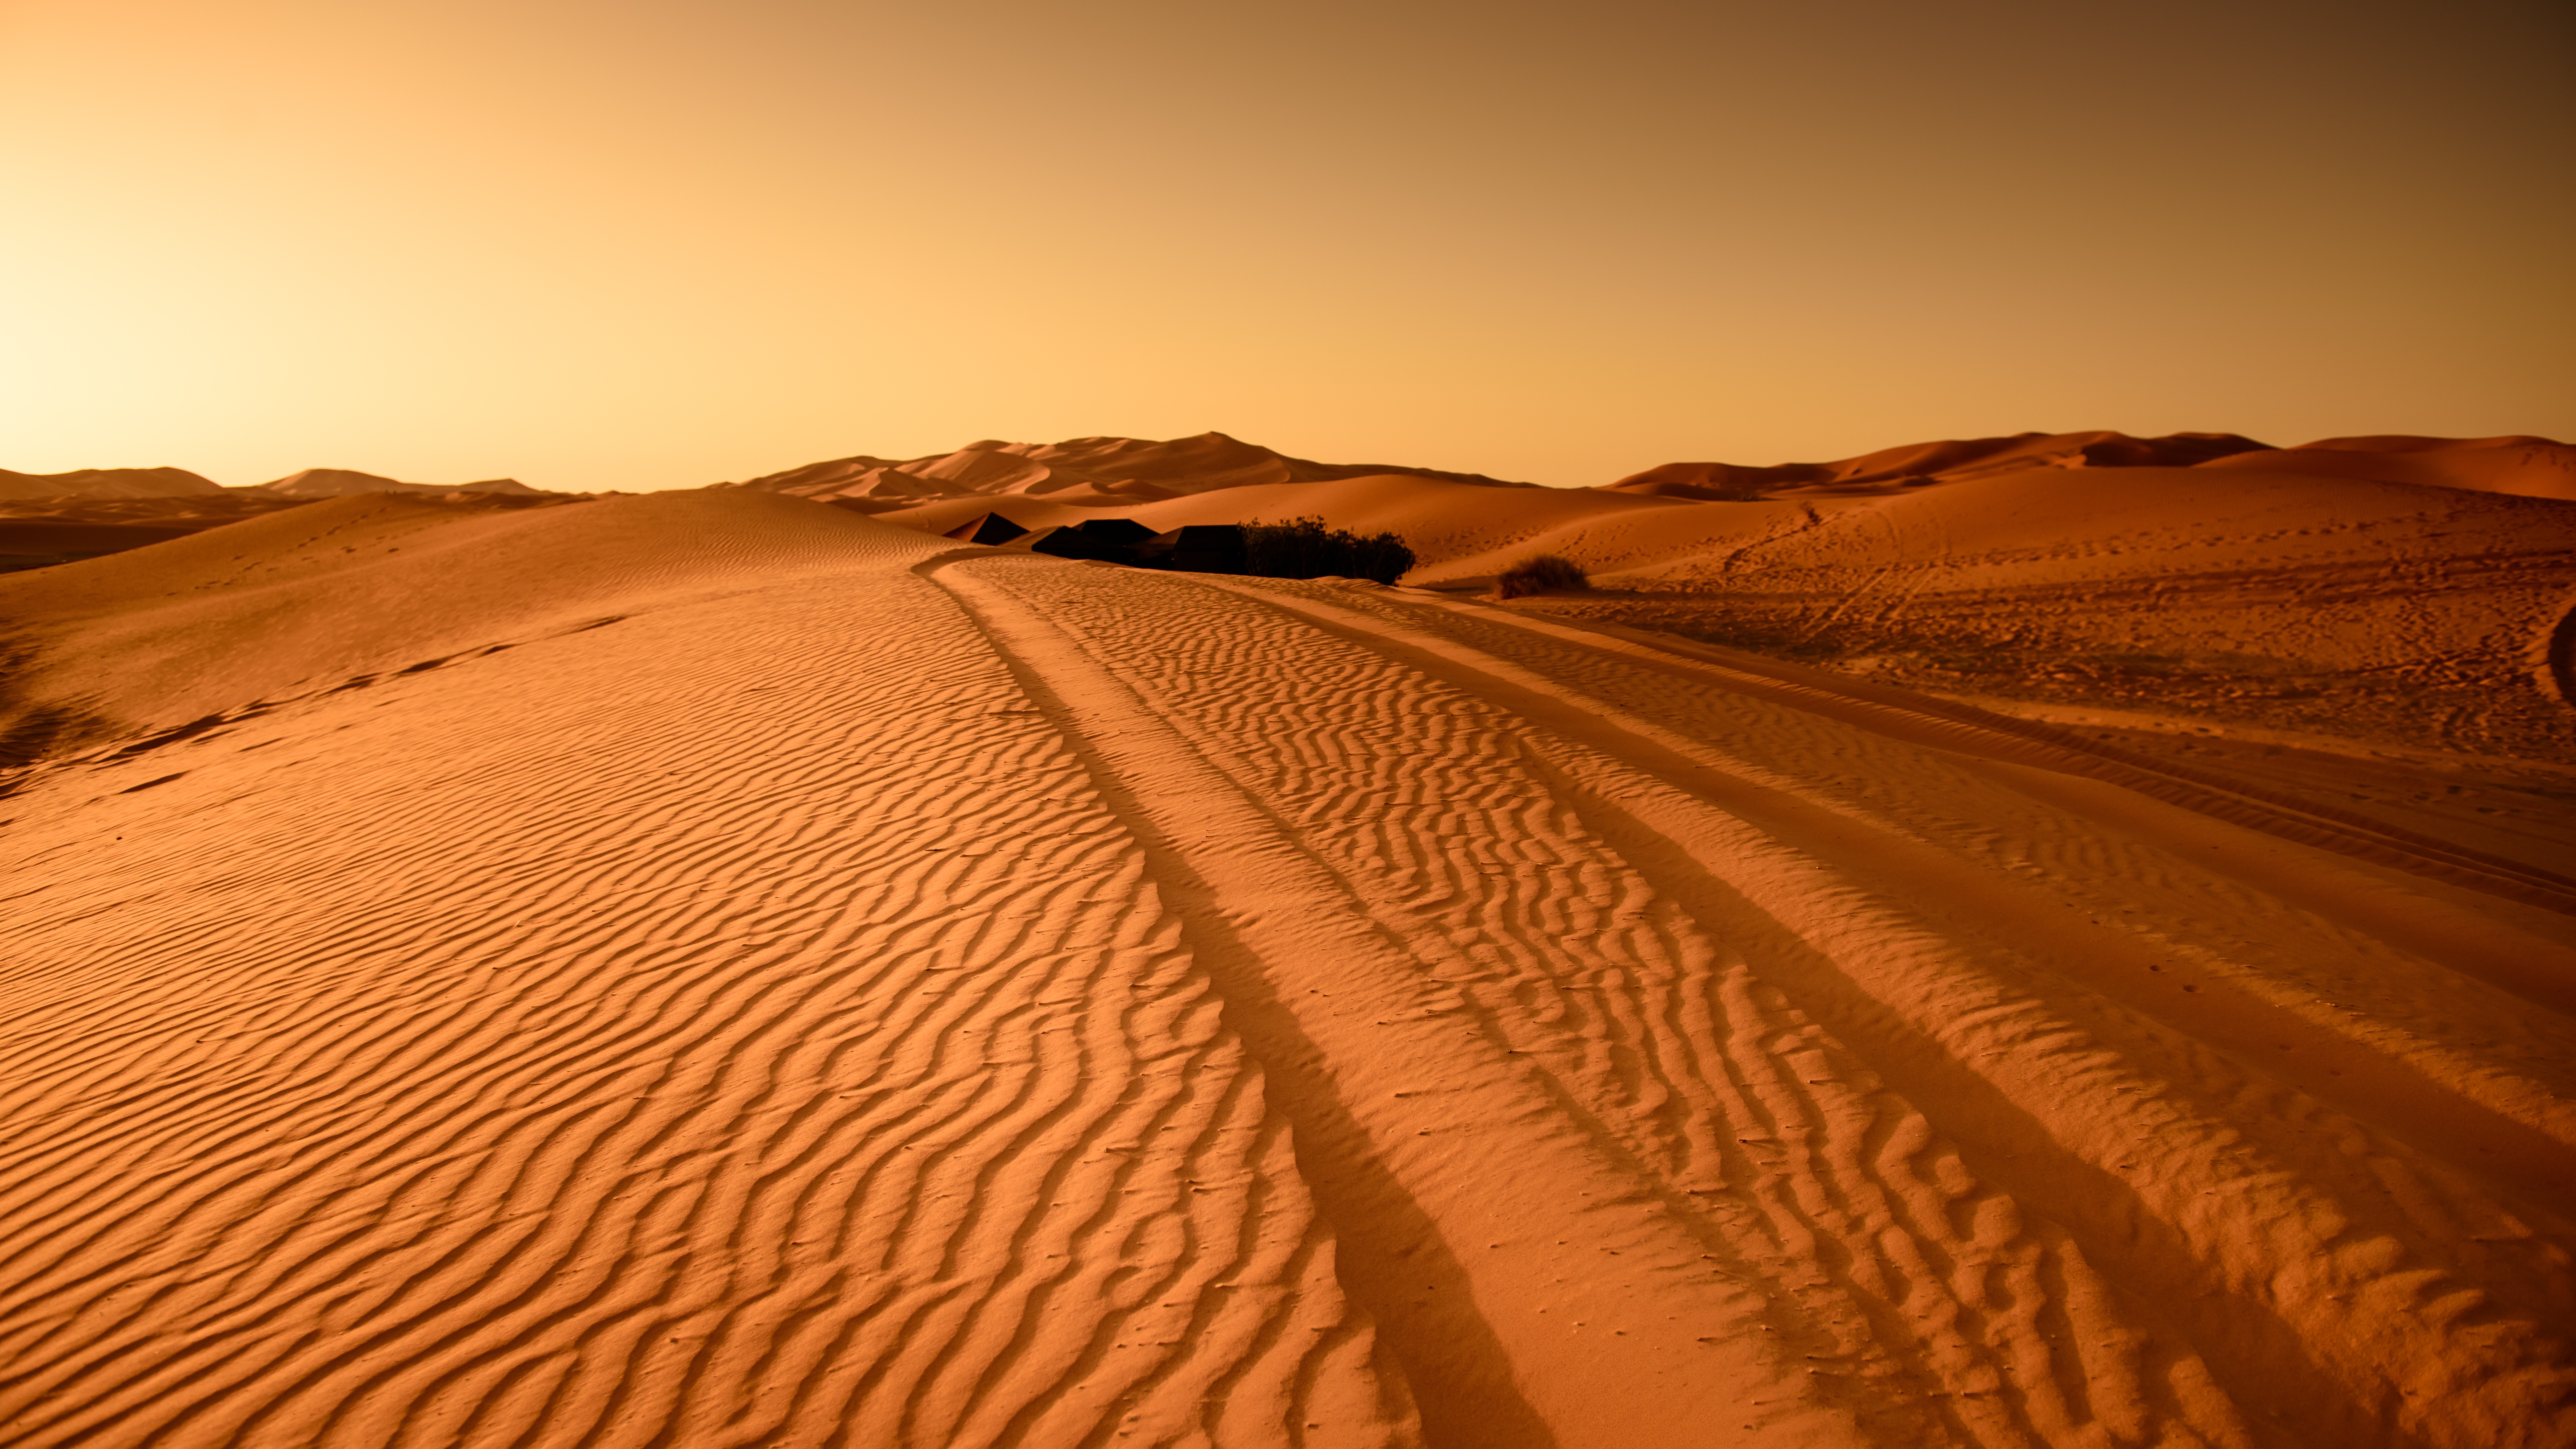  Dune Full HD Wallpaper